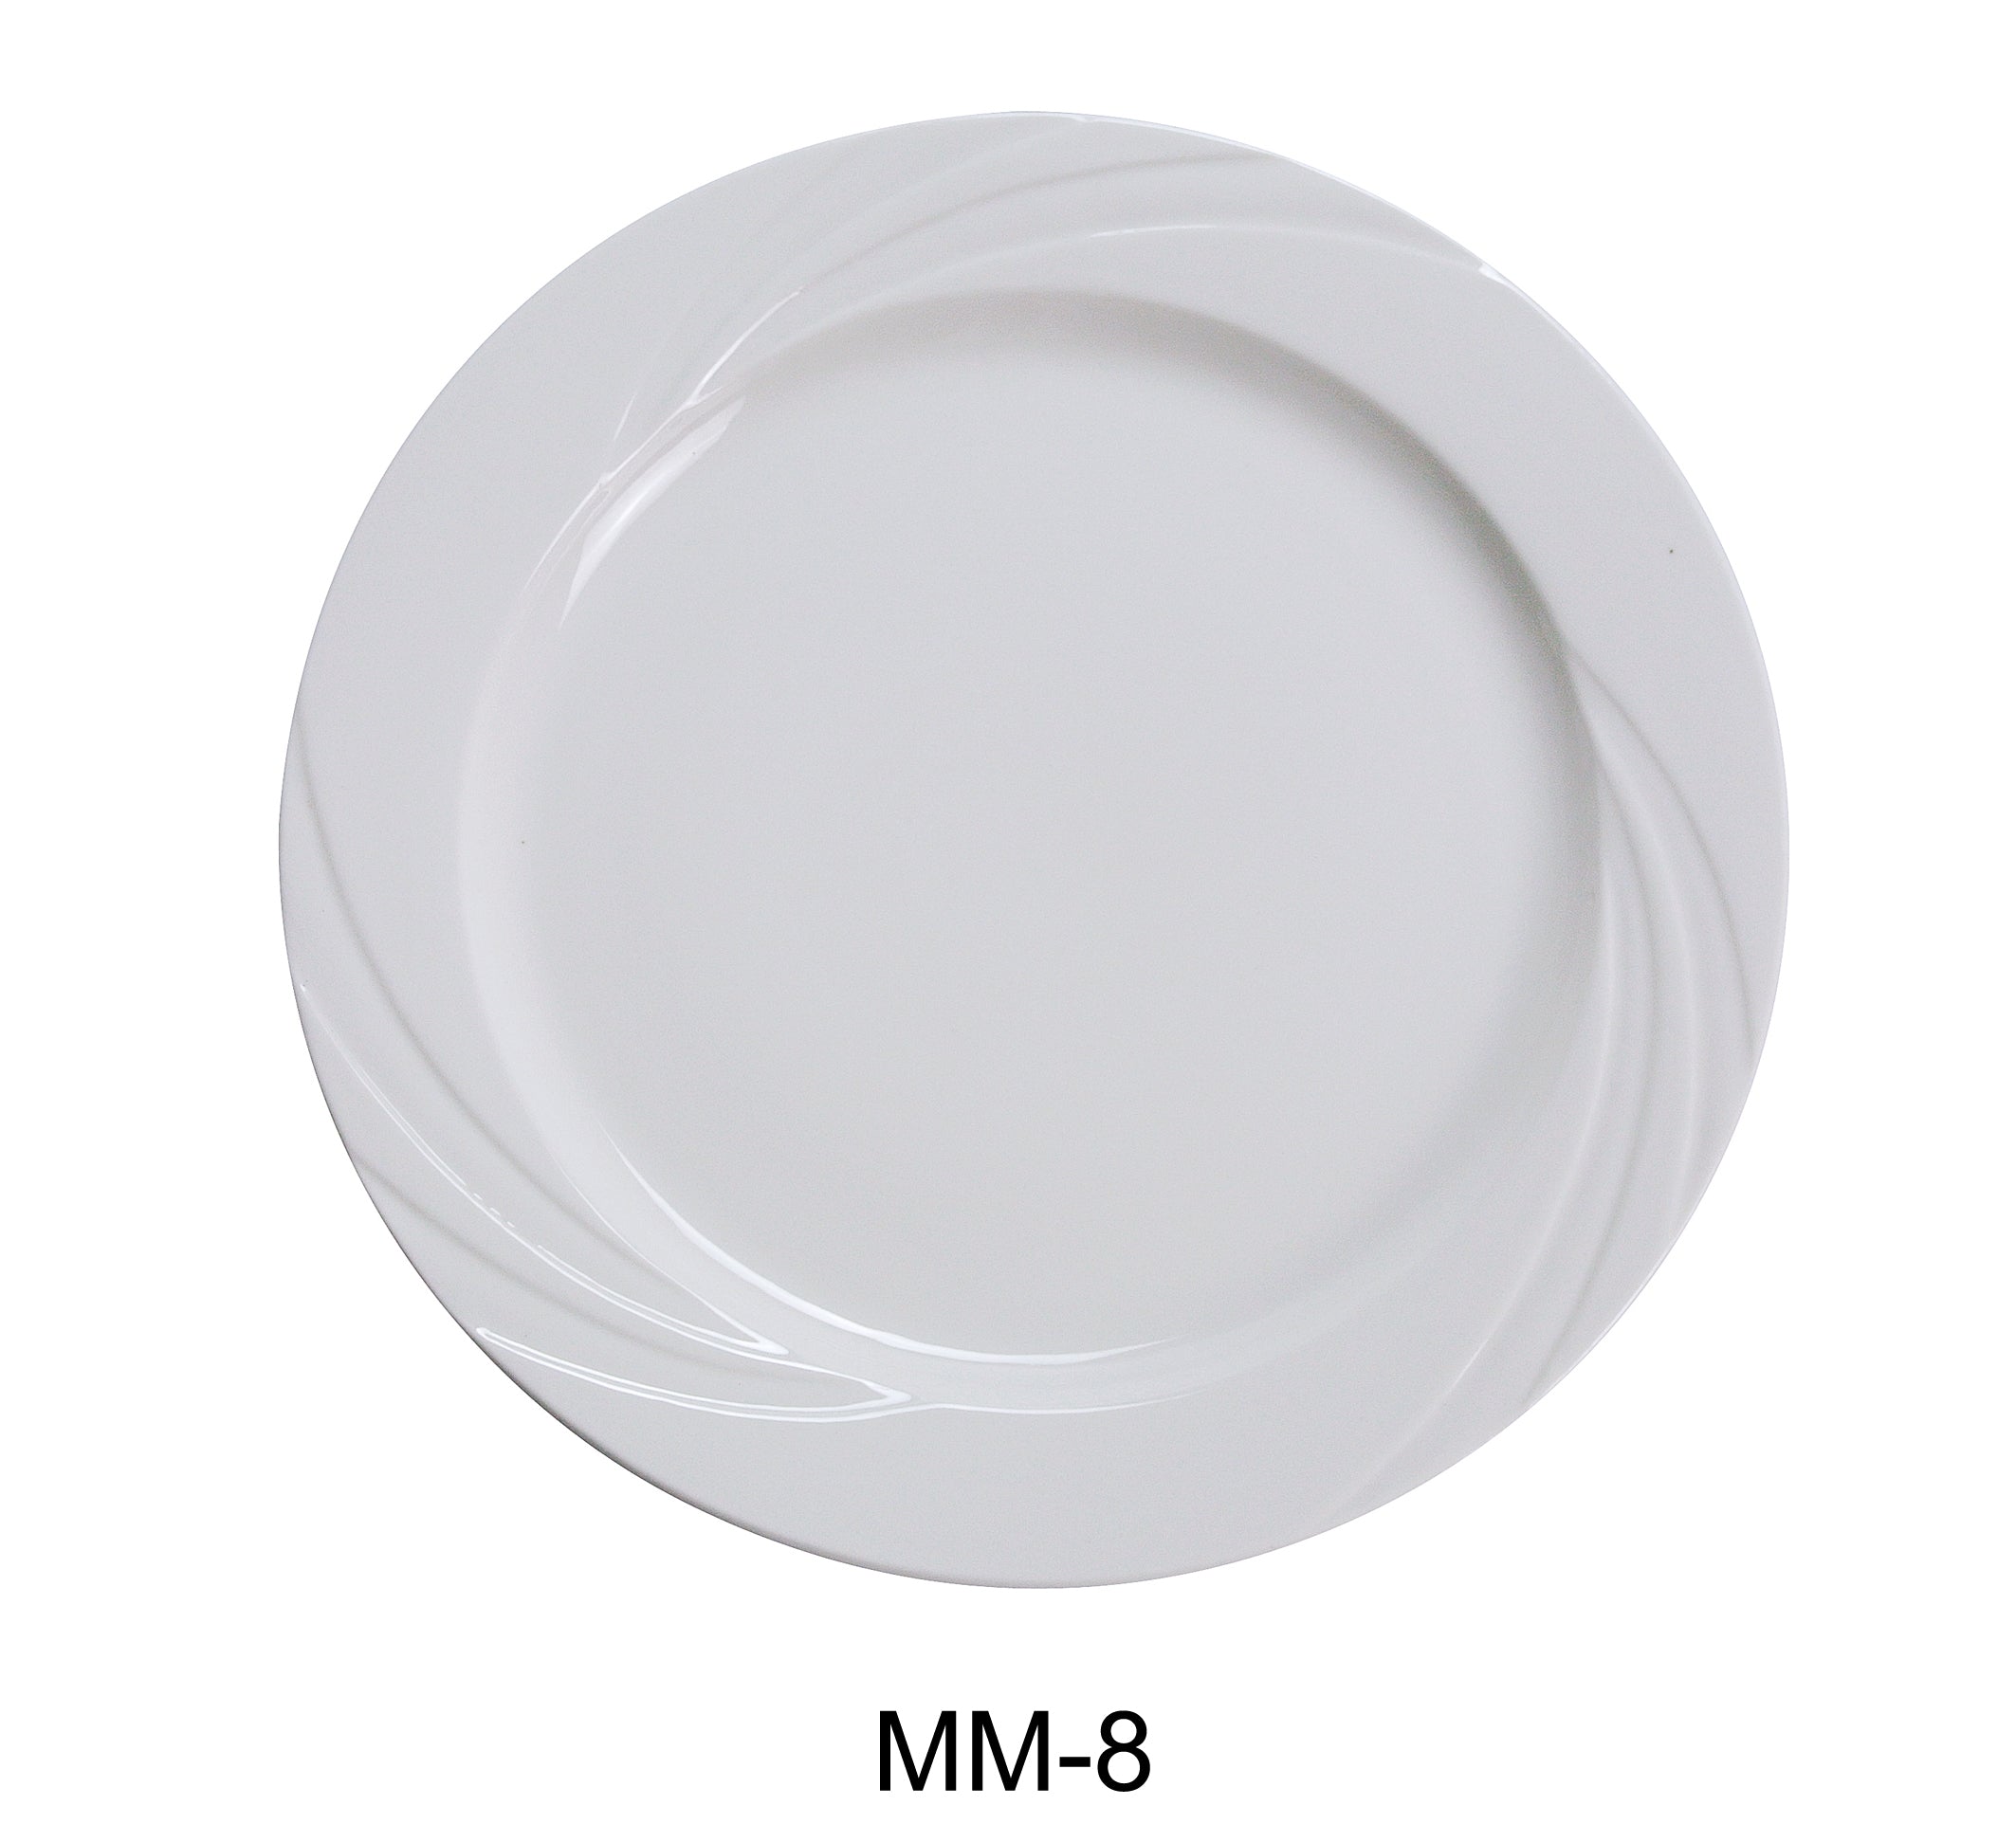 Yanco MM-8 Miami 9.125" Dinner Plate | Lime Atlas